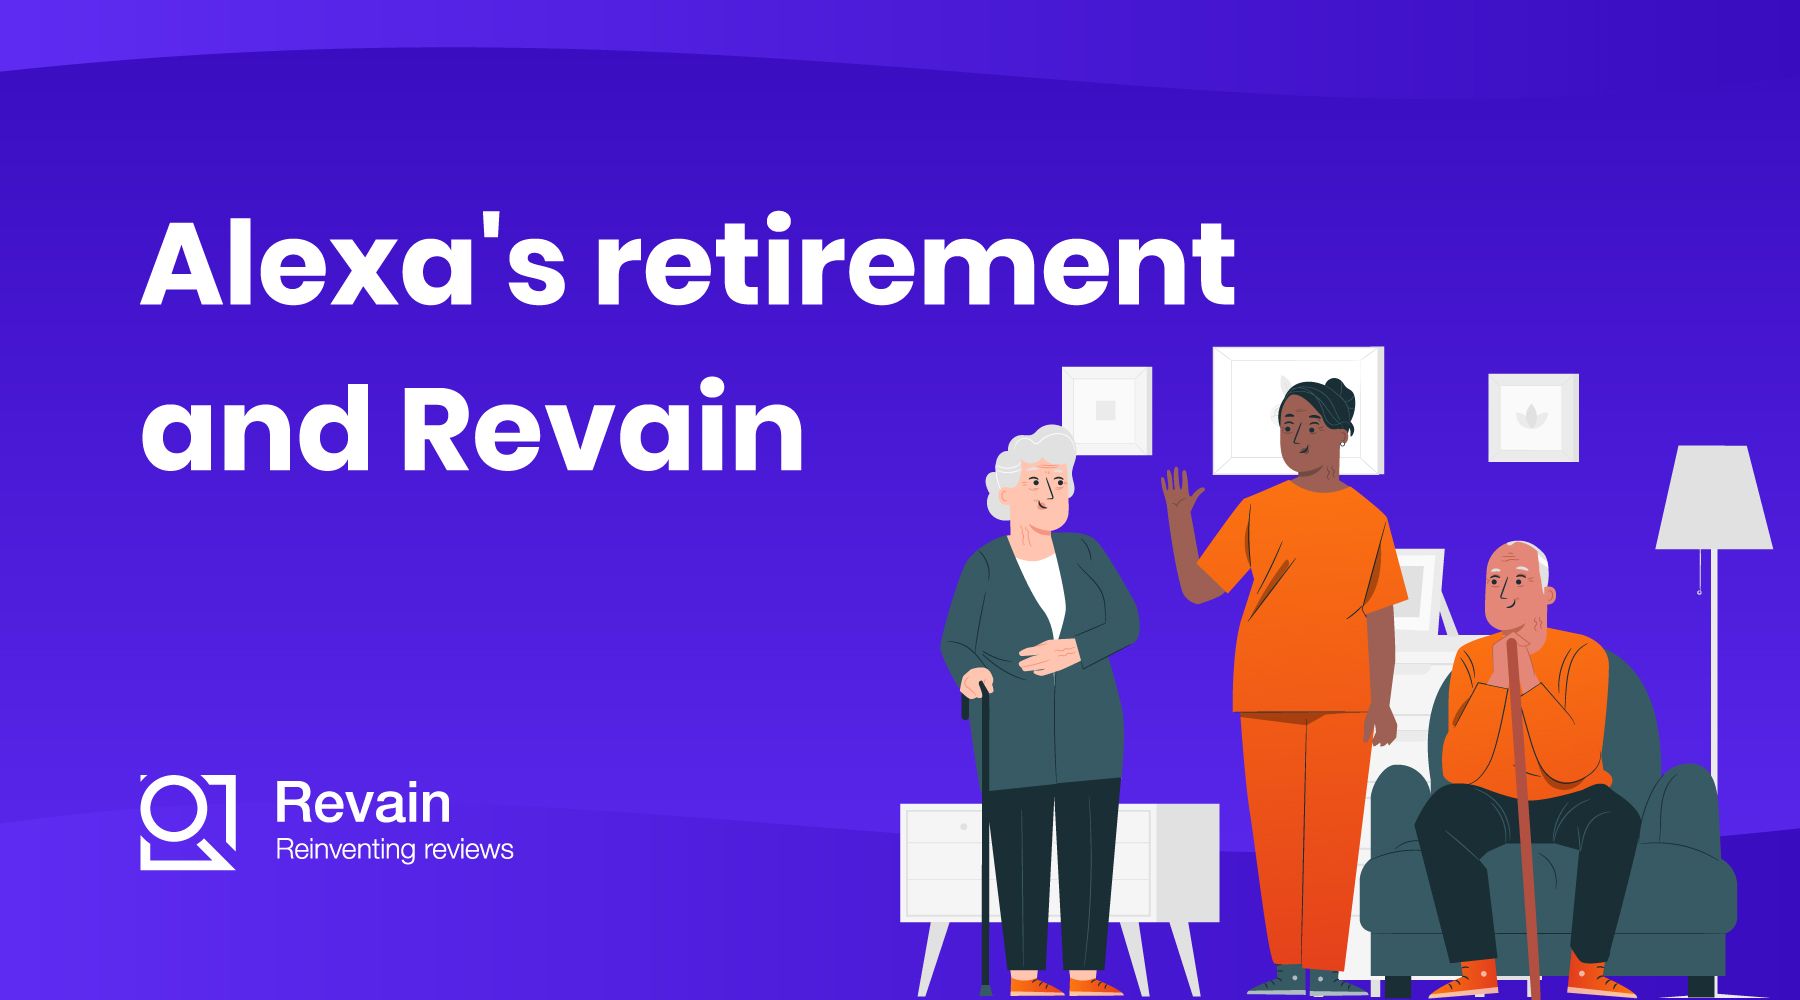 Article Alexa’s retirement and Revain